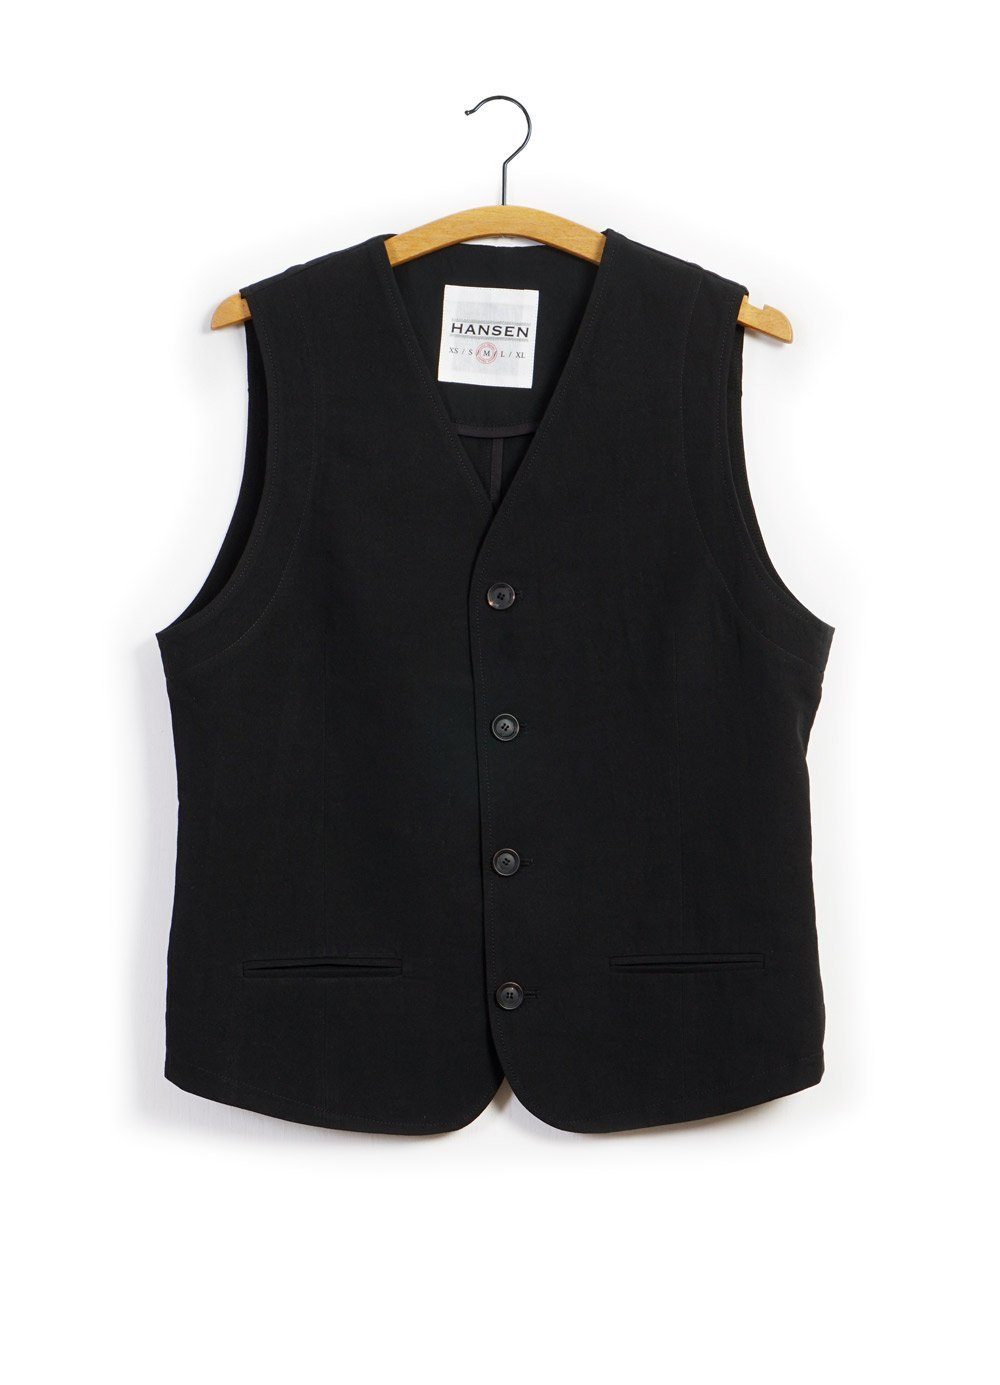 DANIEL | Four Button Waistcoat | Black -HANSEN Garments- HANSEN Garments